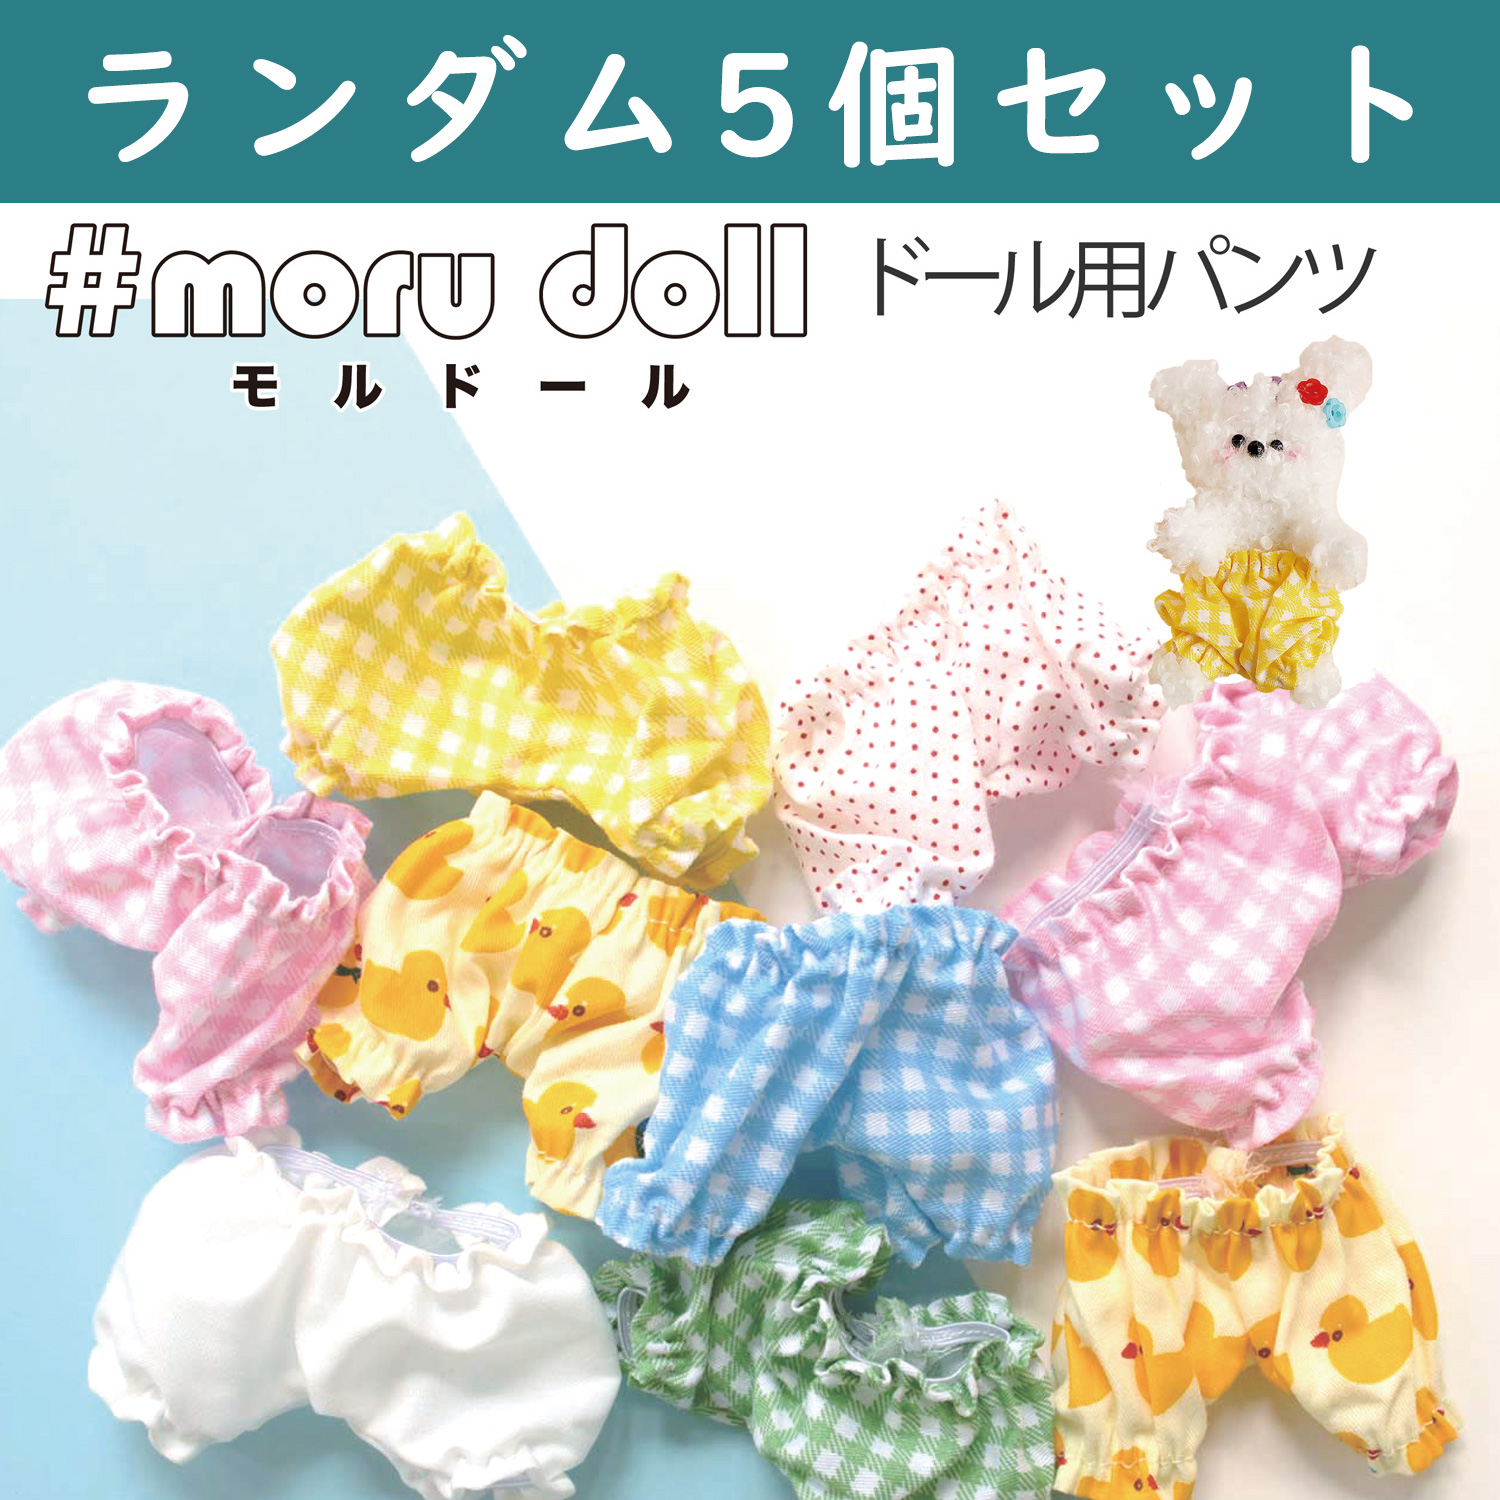 MOL-P5SET Molle doll Korean goods Pumpkin pants for Moldoll Accessories for Moldoll doll Random 5 pcs (set)